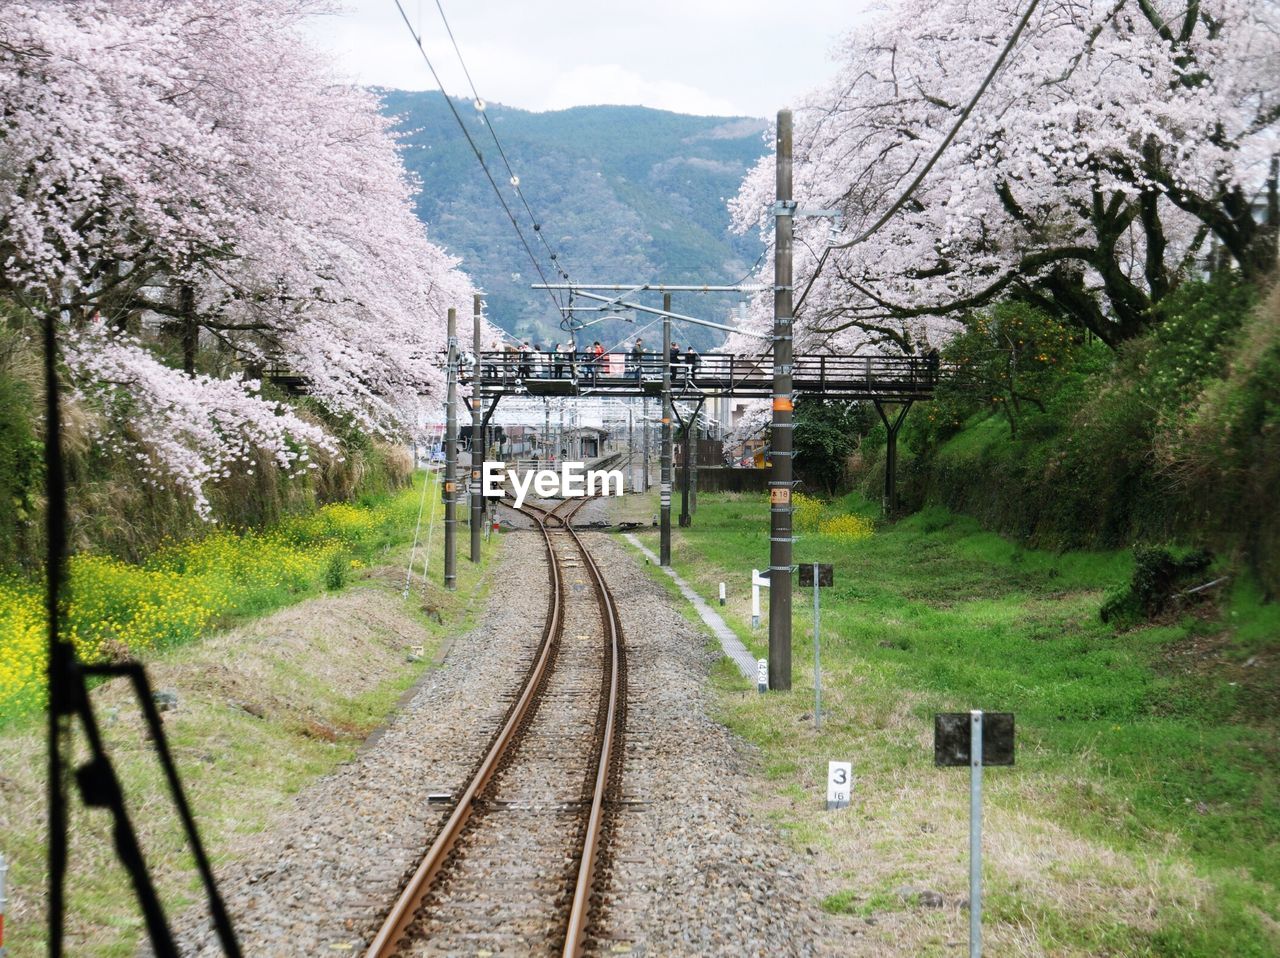 Railroad tracks amidst cherry blossom trees seen from train windshield